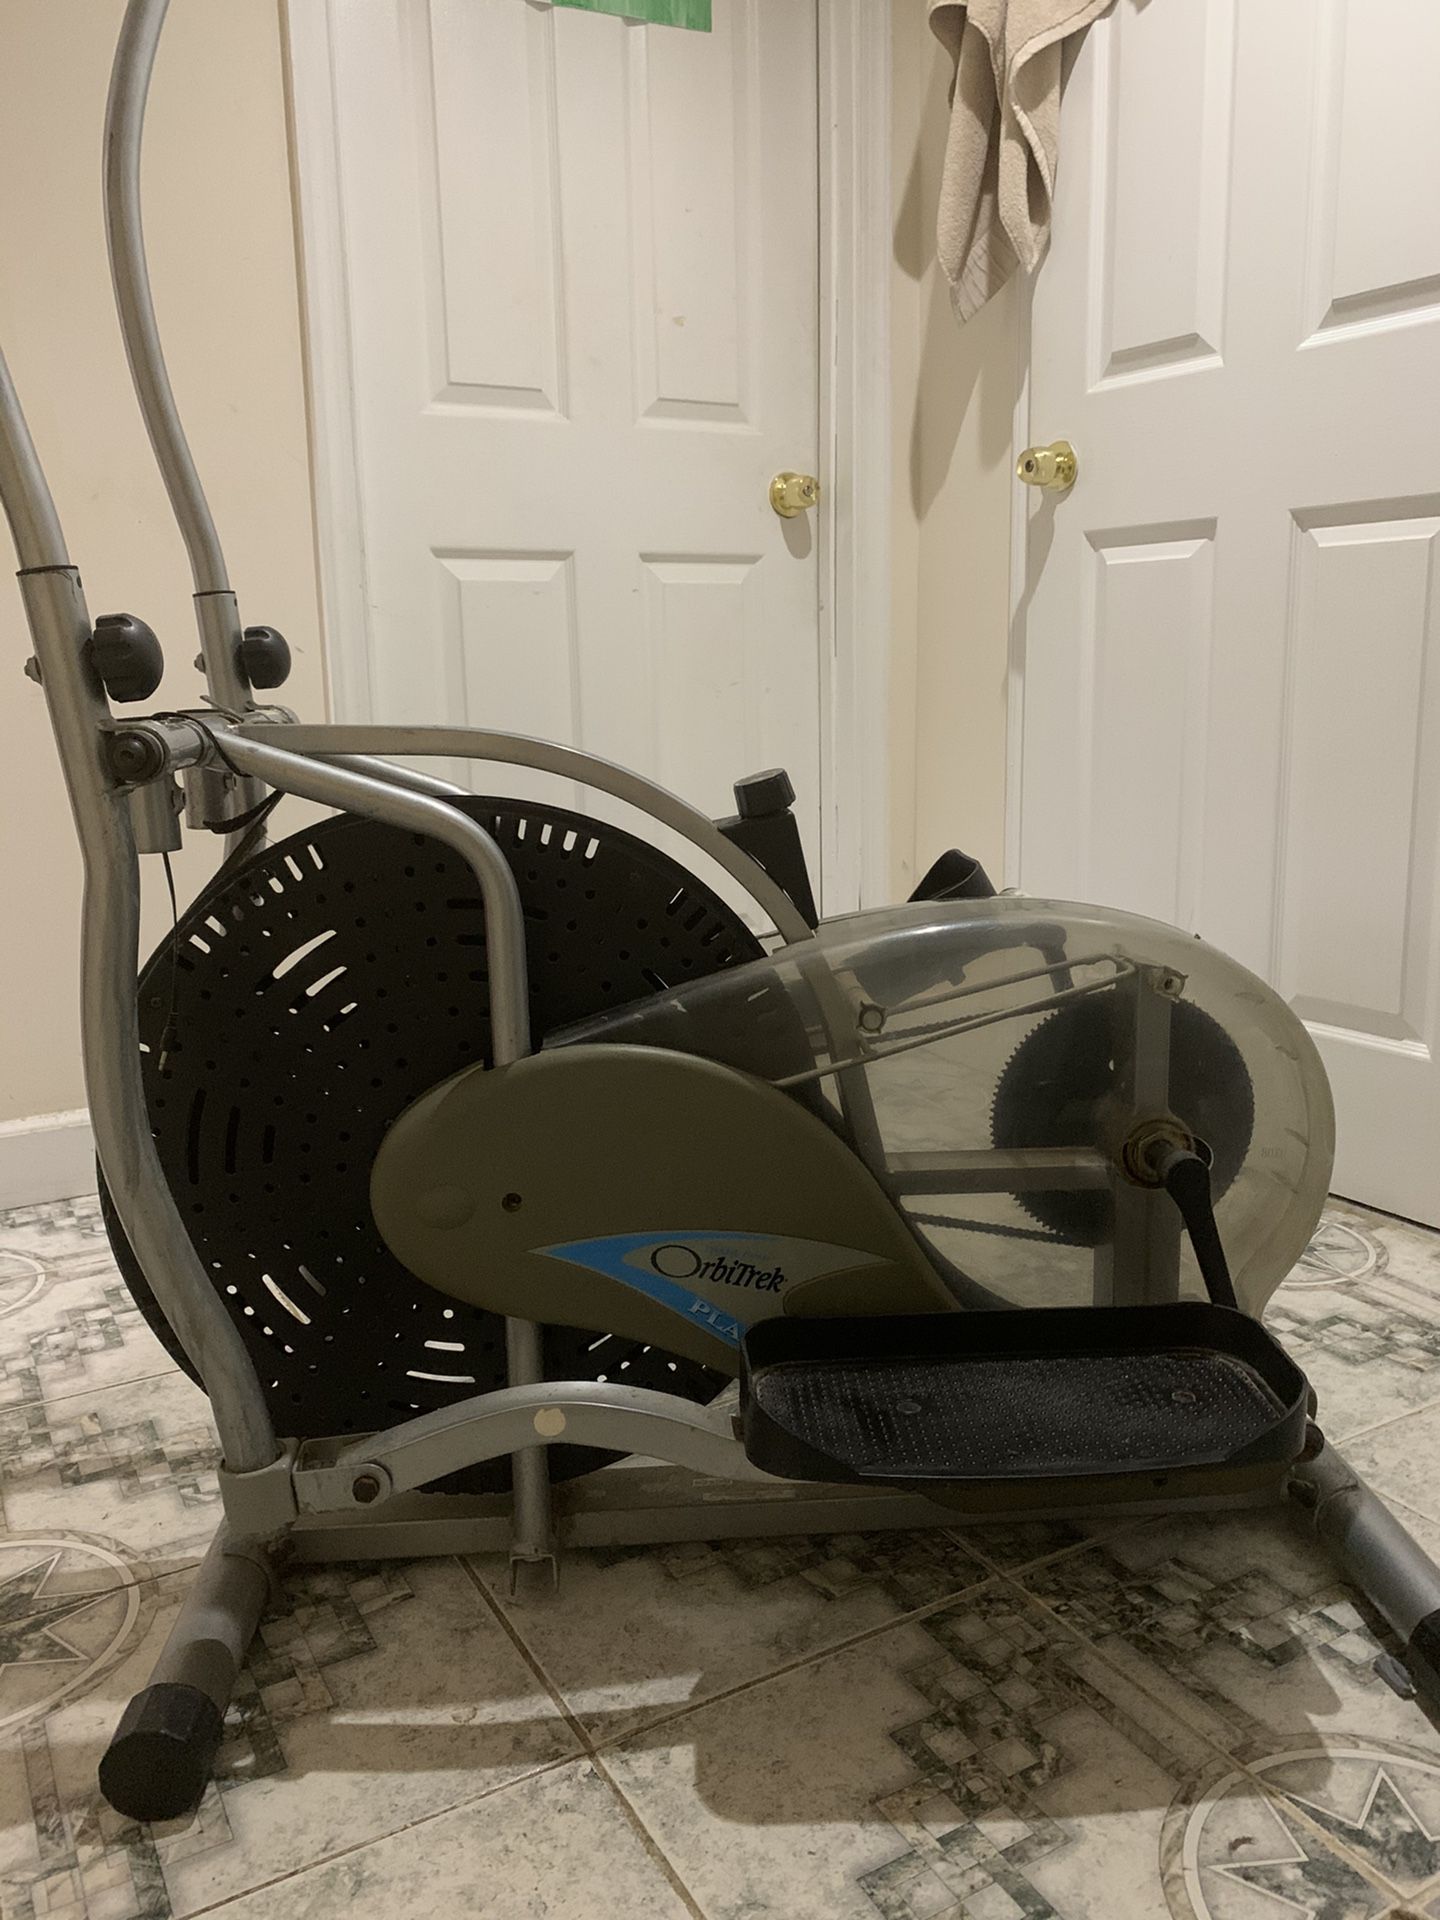 Orbitrek elliptical machine trainer exercise bike